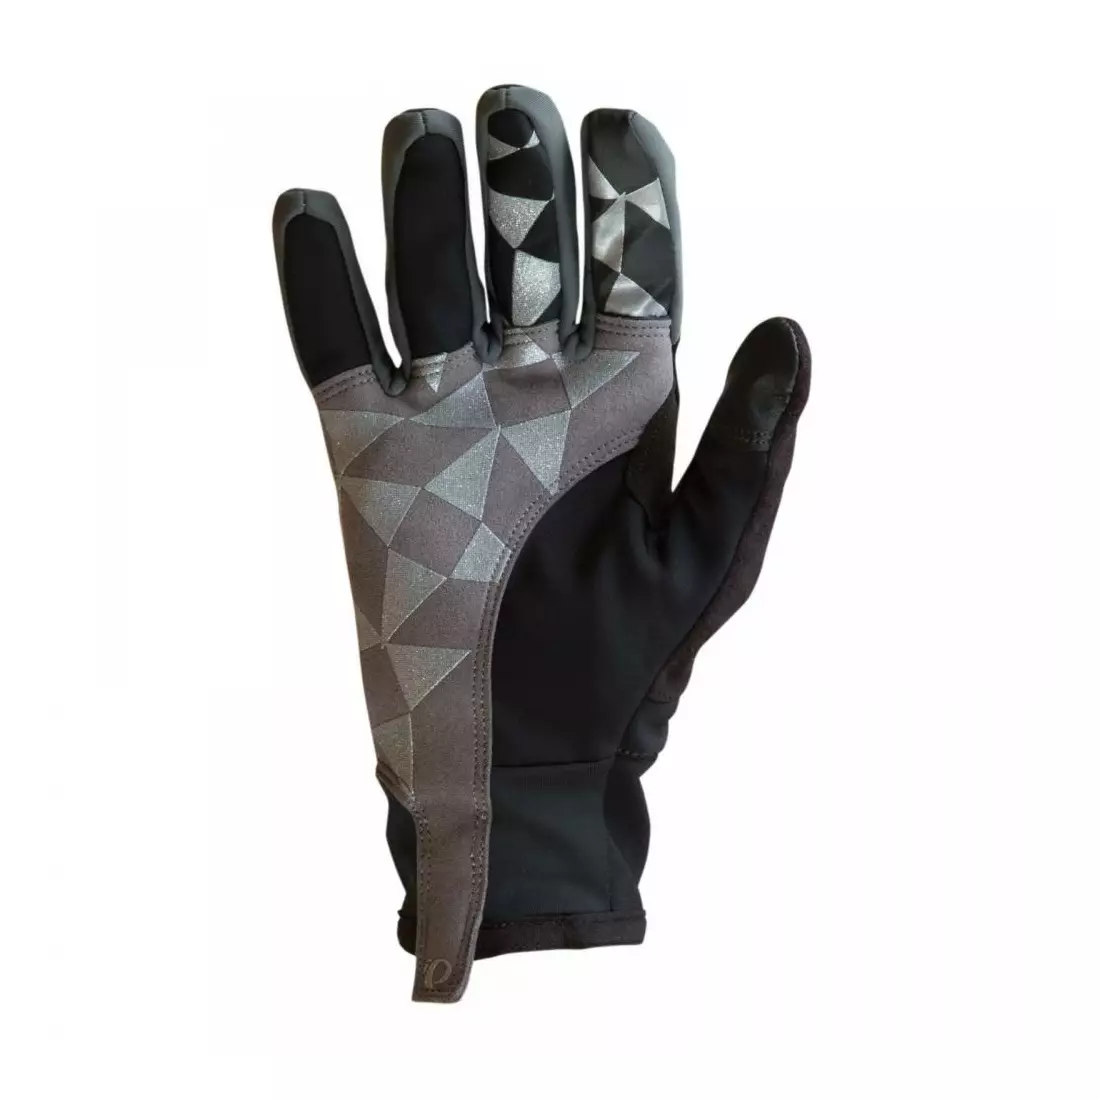 PEARL IZUMI W's Select Softshell 14241405-021 - women's winter sports gloves